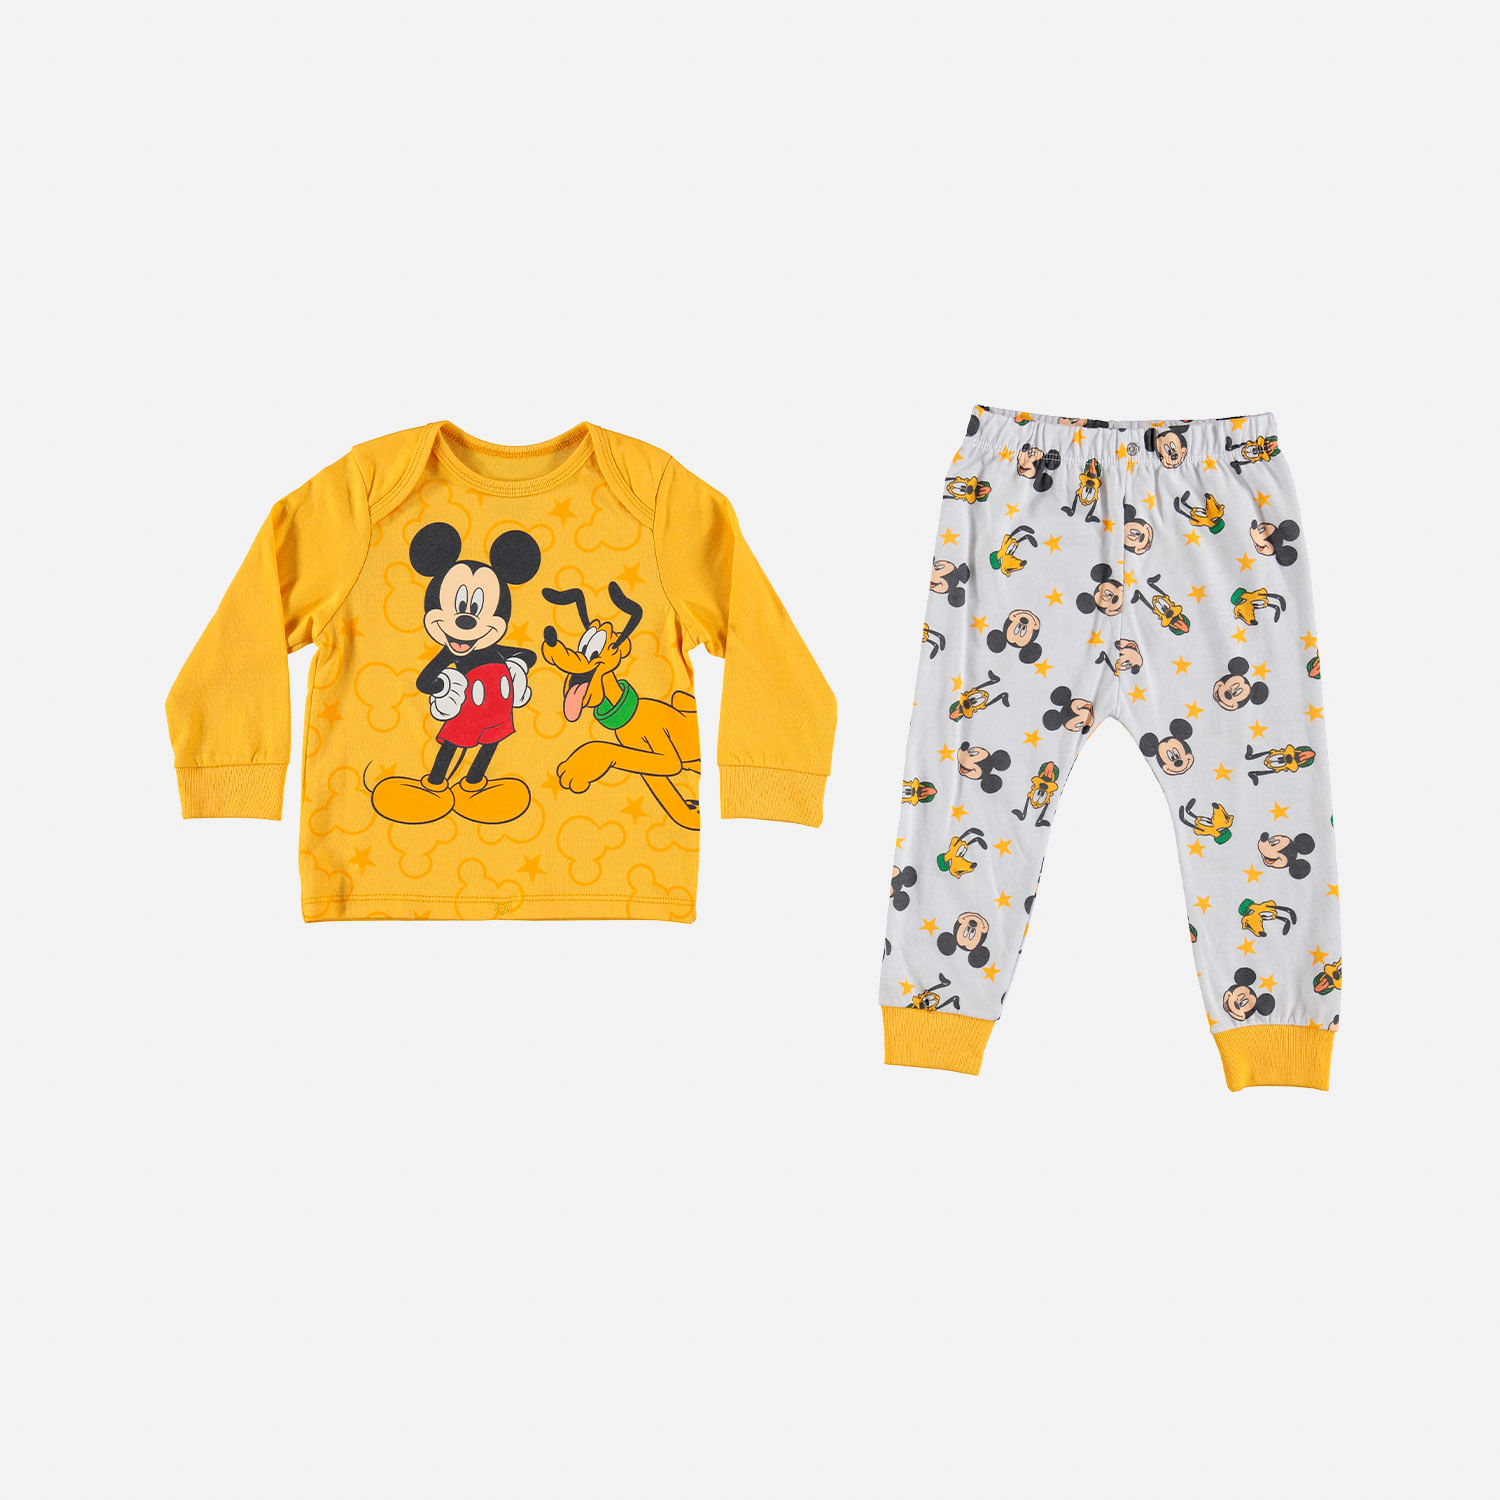 Pijama de manga larga/pantalón largo amarillo/blanco de Mickey Mouse ©Disney